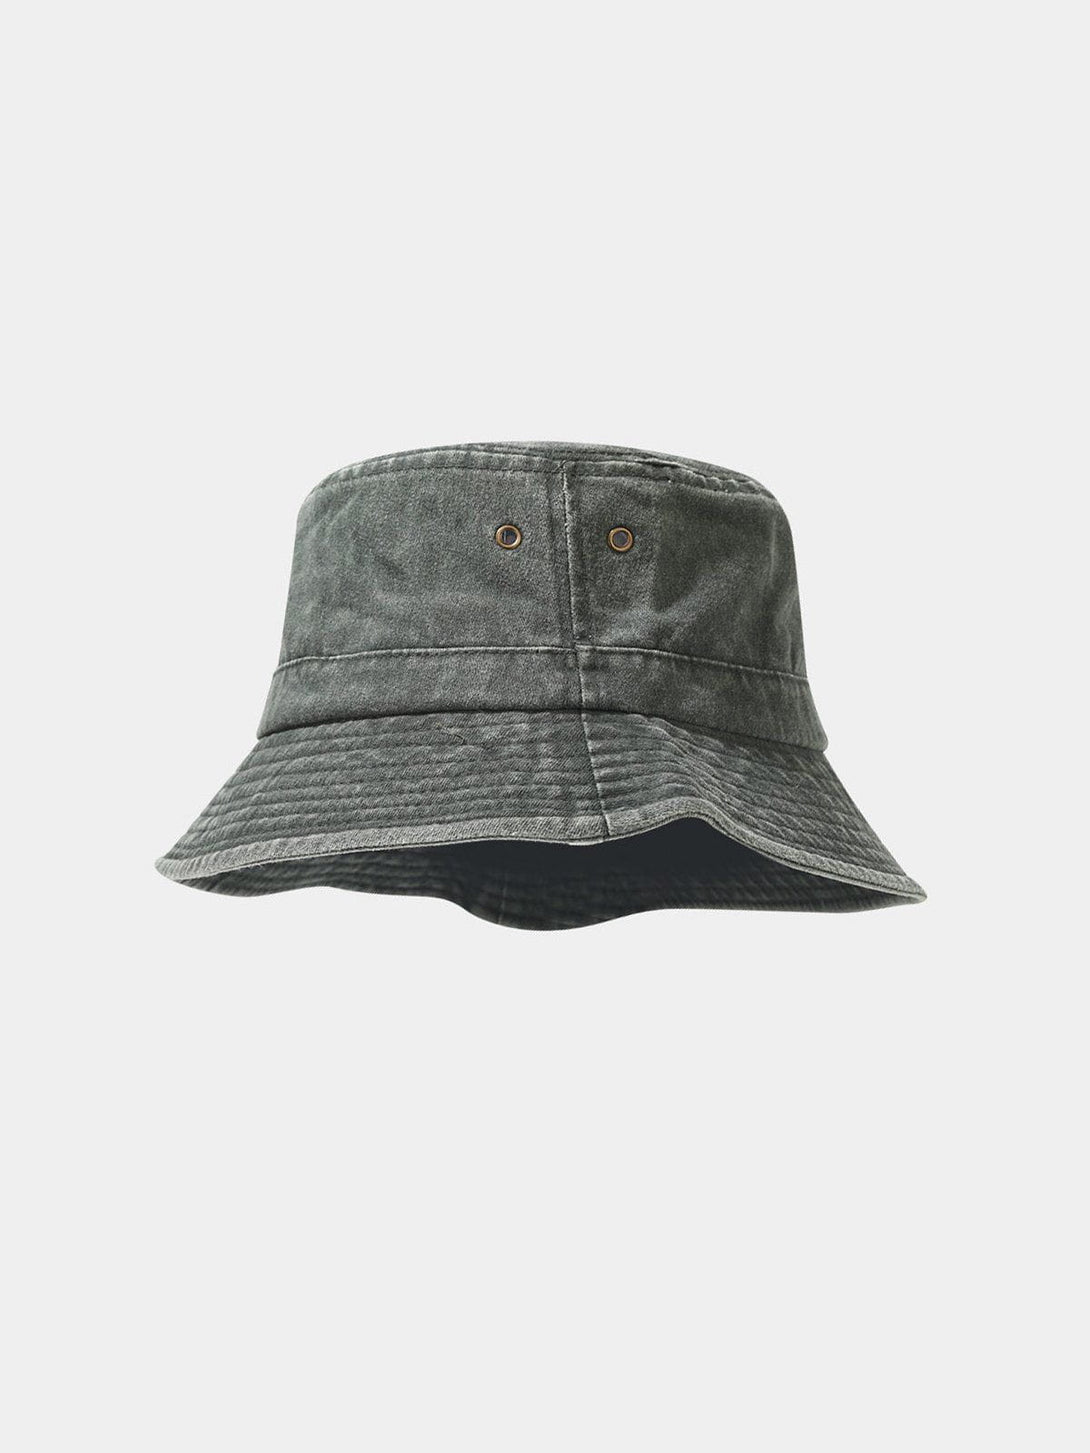 Majesda® - Vintage Washed Distressed Hat- Outfit Ideas - Streetwear Fashion - majesda.com